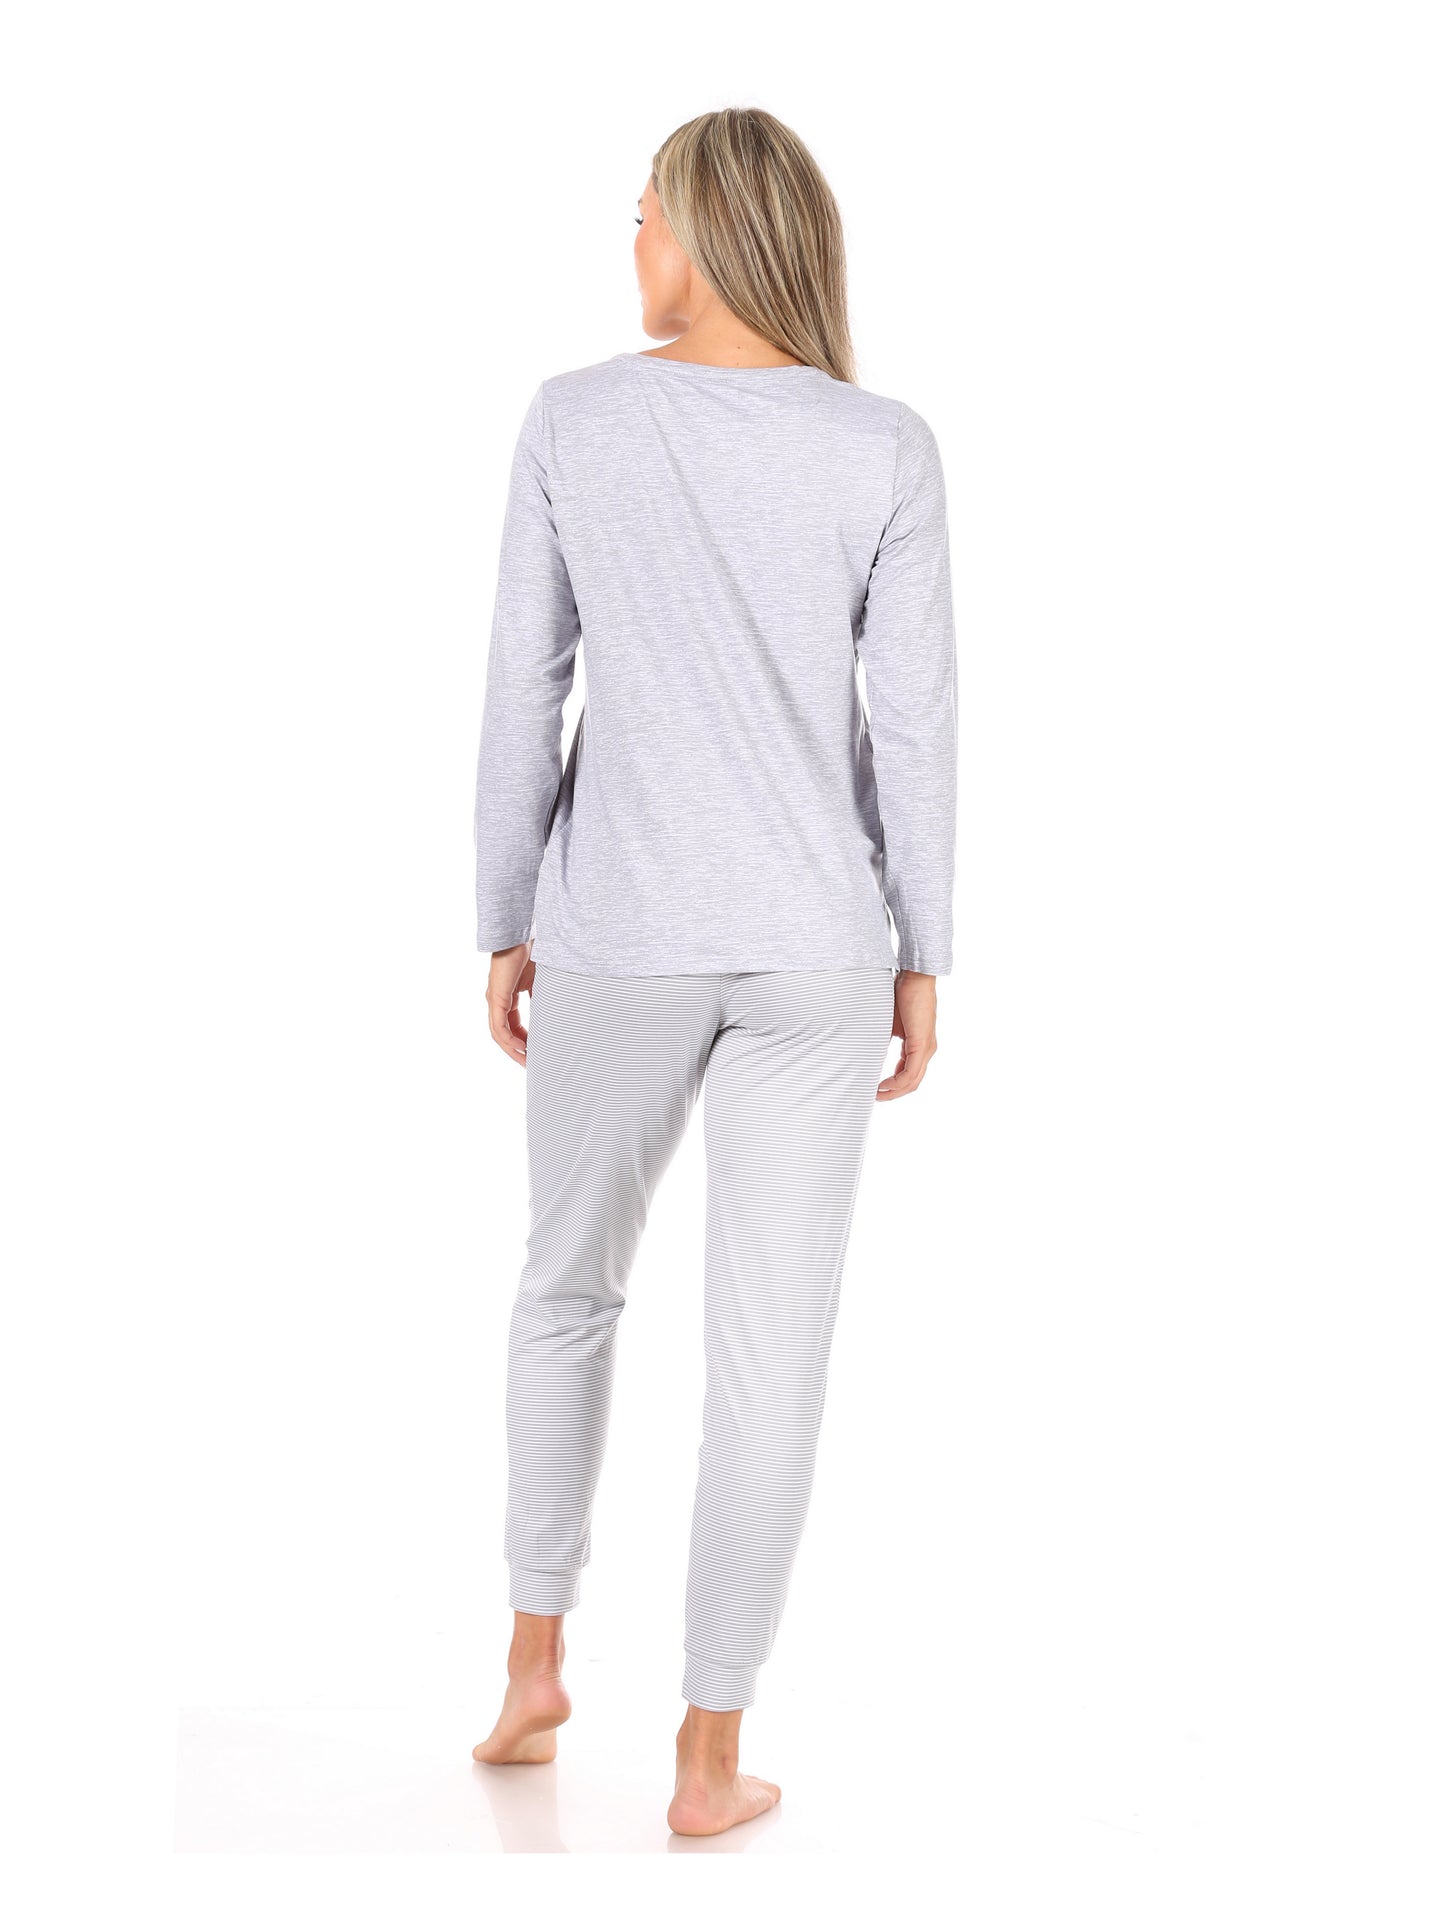 Women's "DREAMER" Long Sleeve Top and Jogger Pajama Set - Rae Dunn Wear - W Pants Set